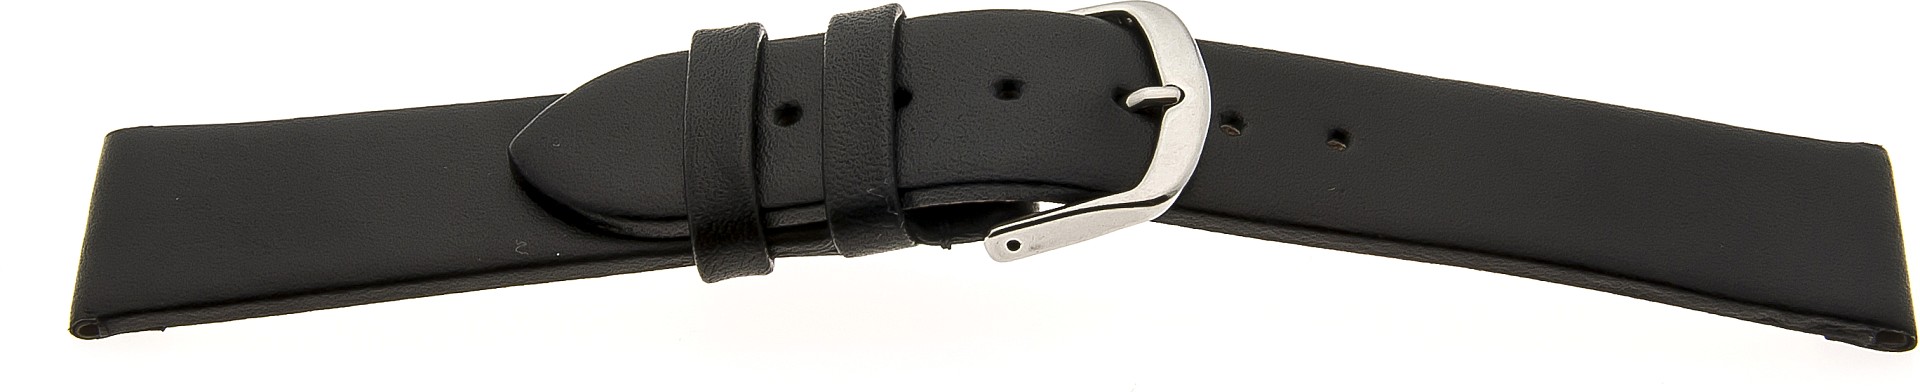   Uhrenarmband Business Dornschließe - Leder, glatt, XL-Größen - schwarz ohne Naht 